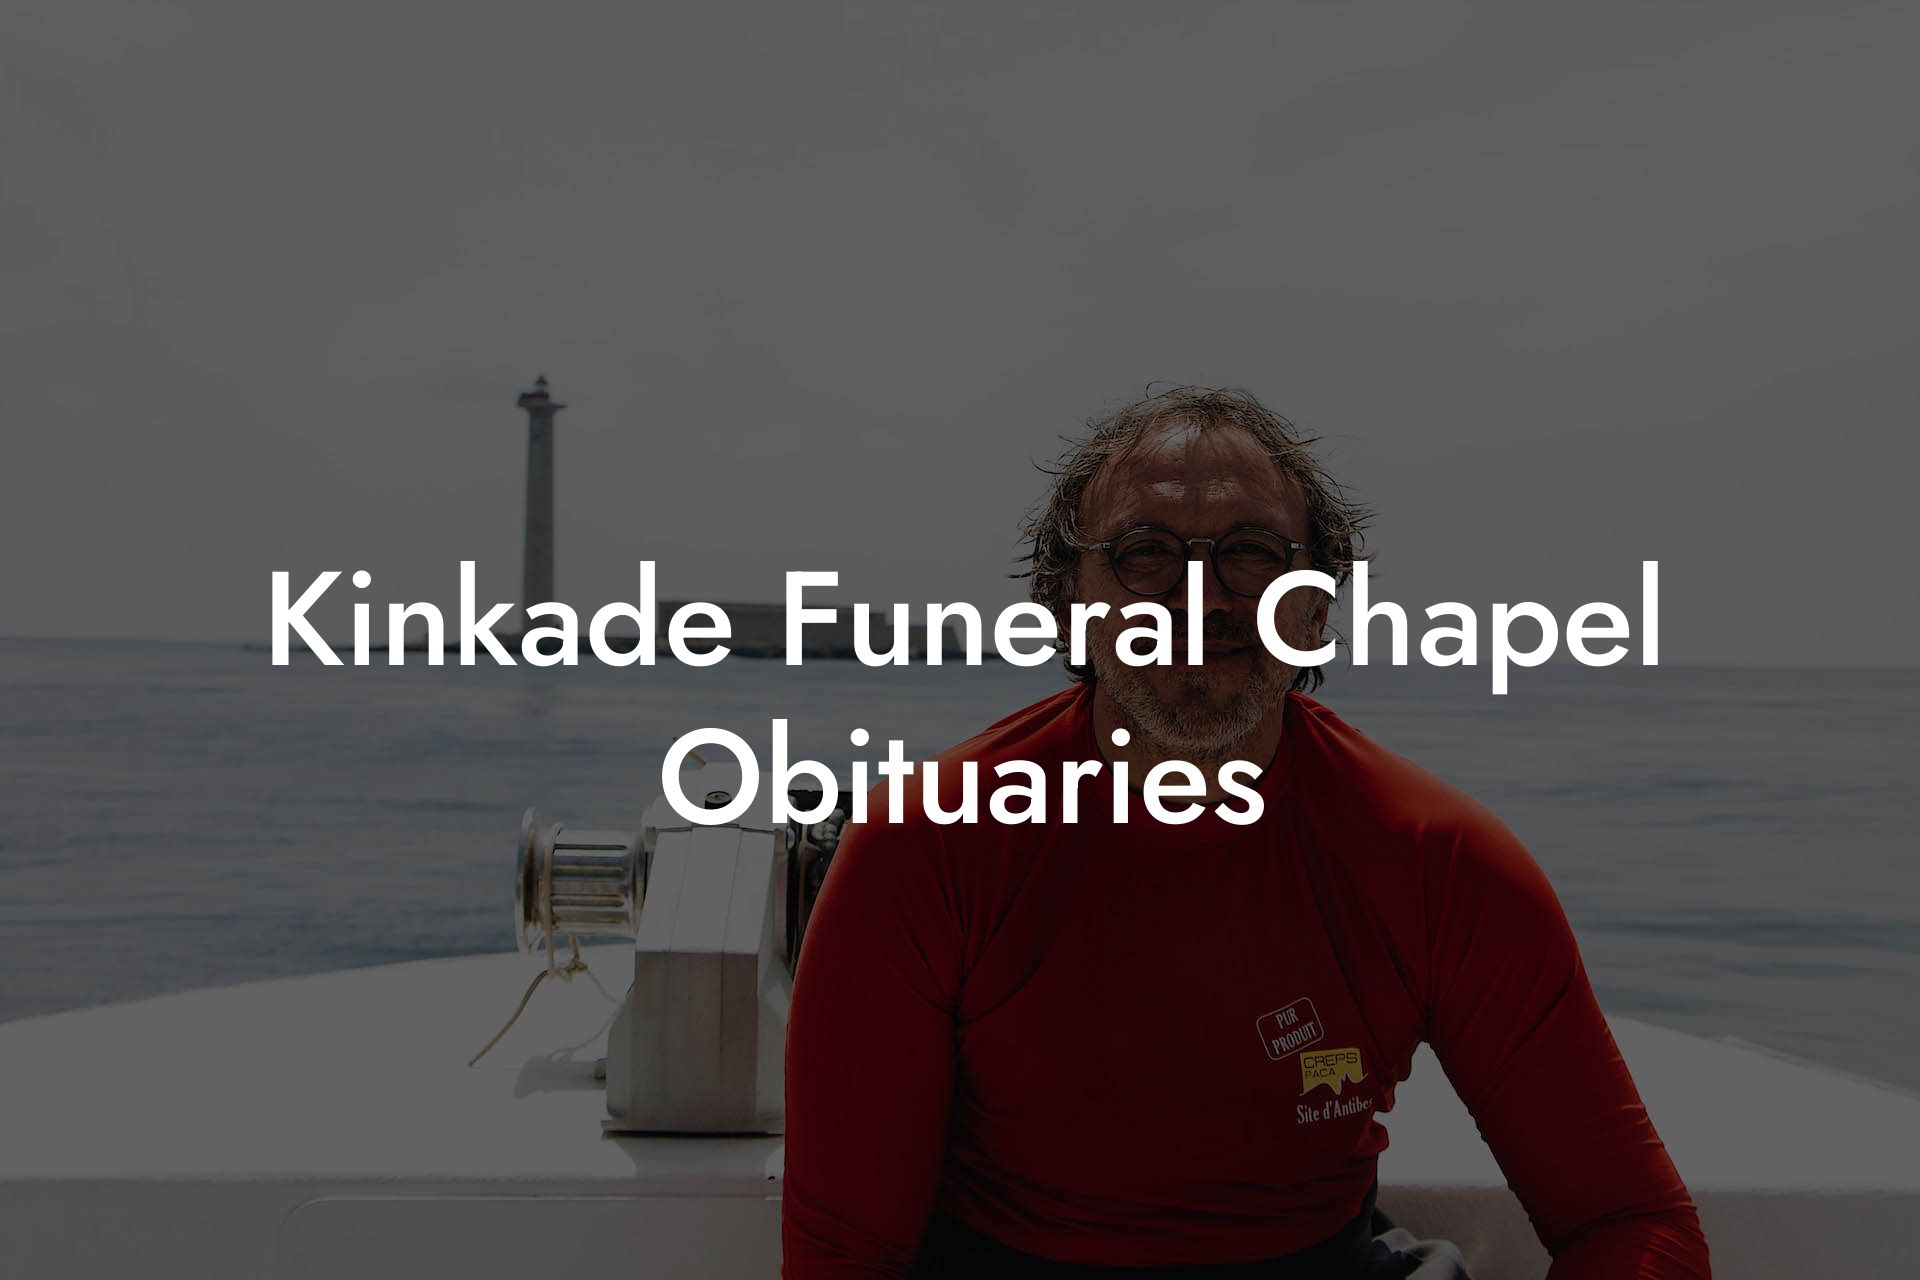 Kinkade Funeral Chapel Obituaries